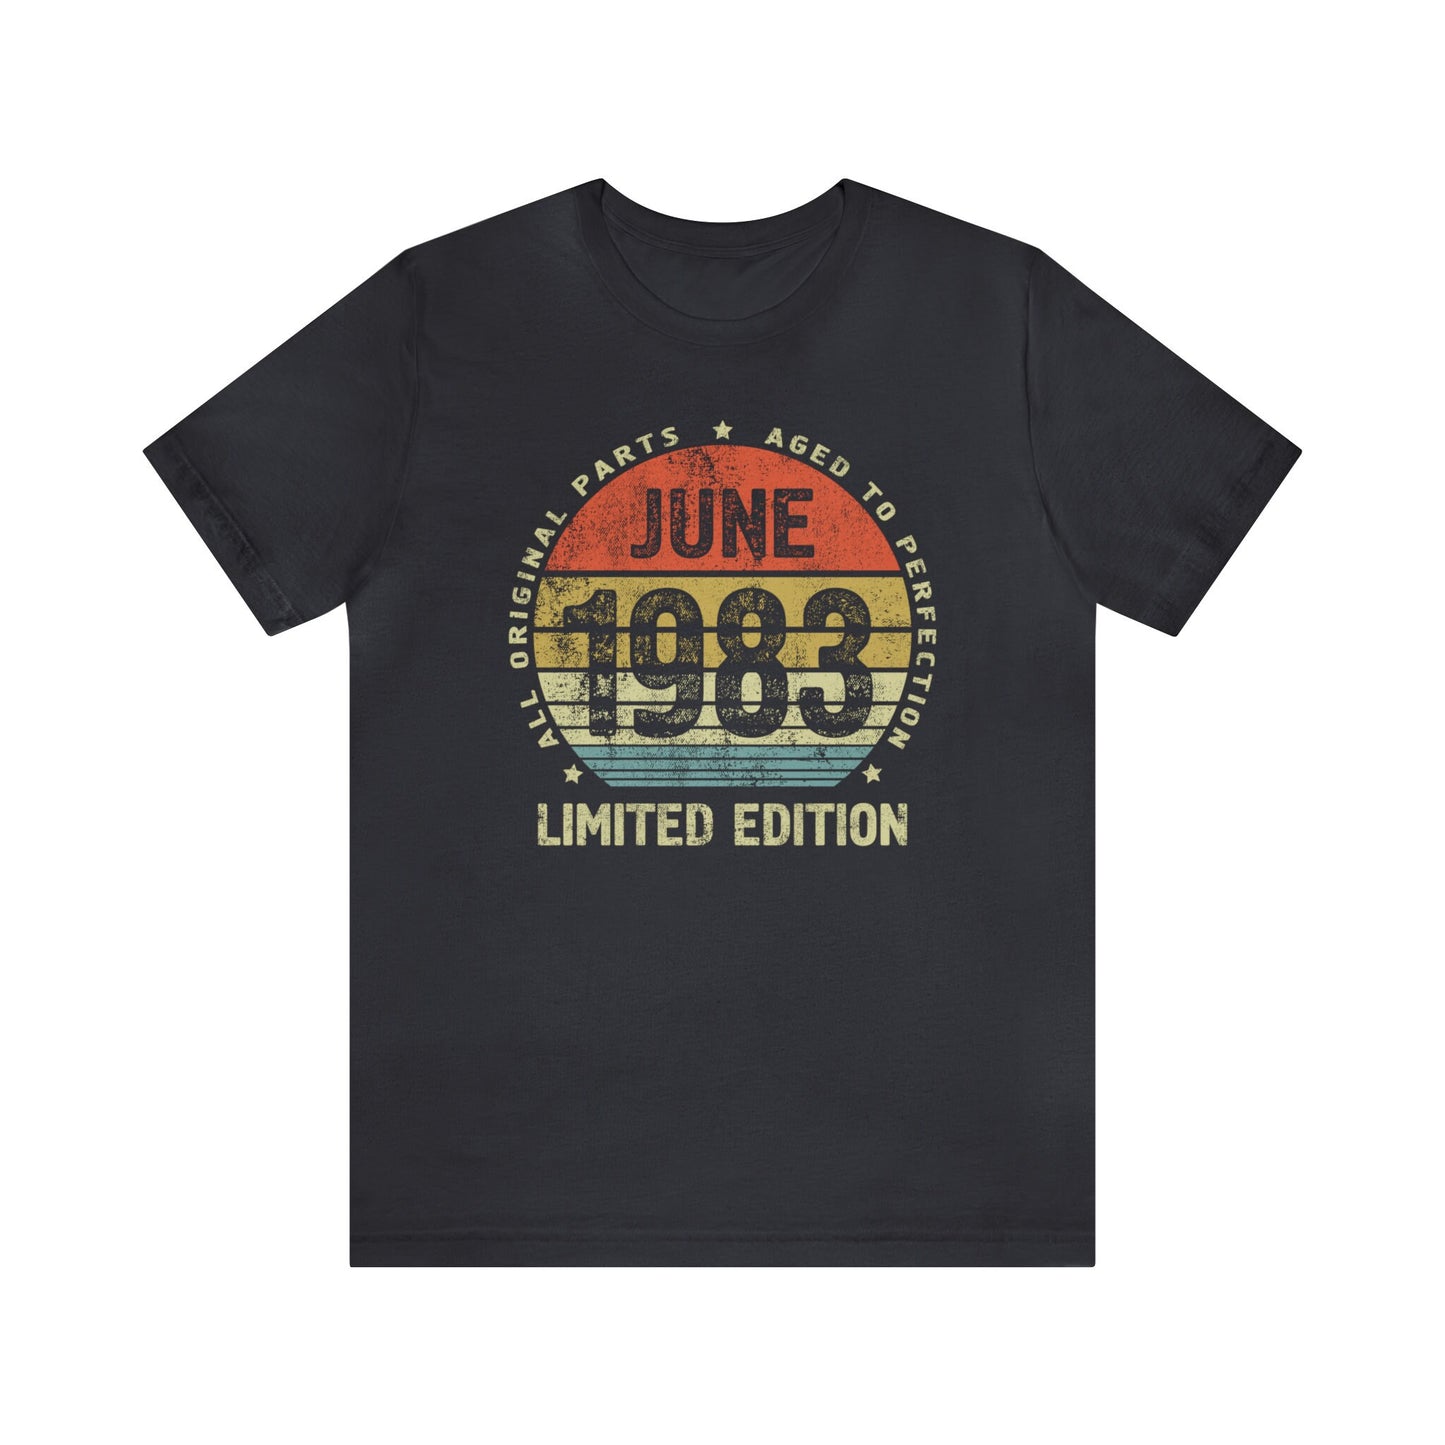 June 1983 birthday gift shirt for women or men, T-shirt for sister or brother